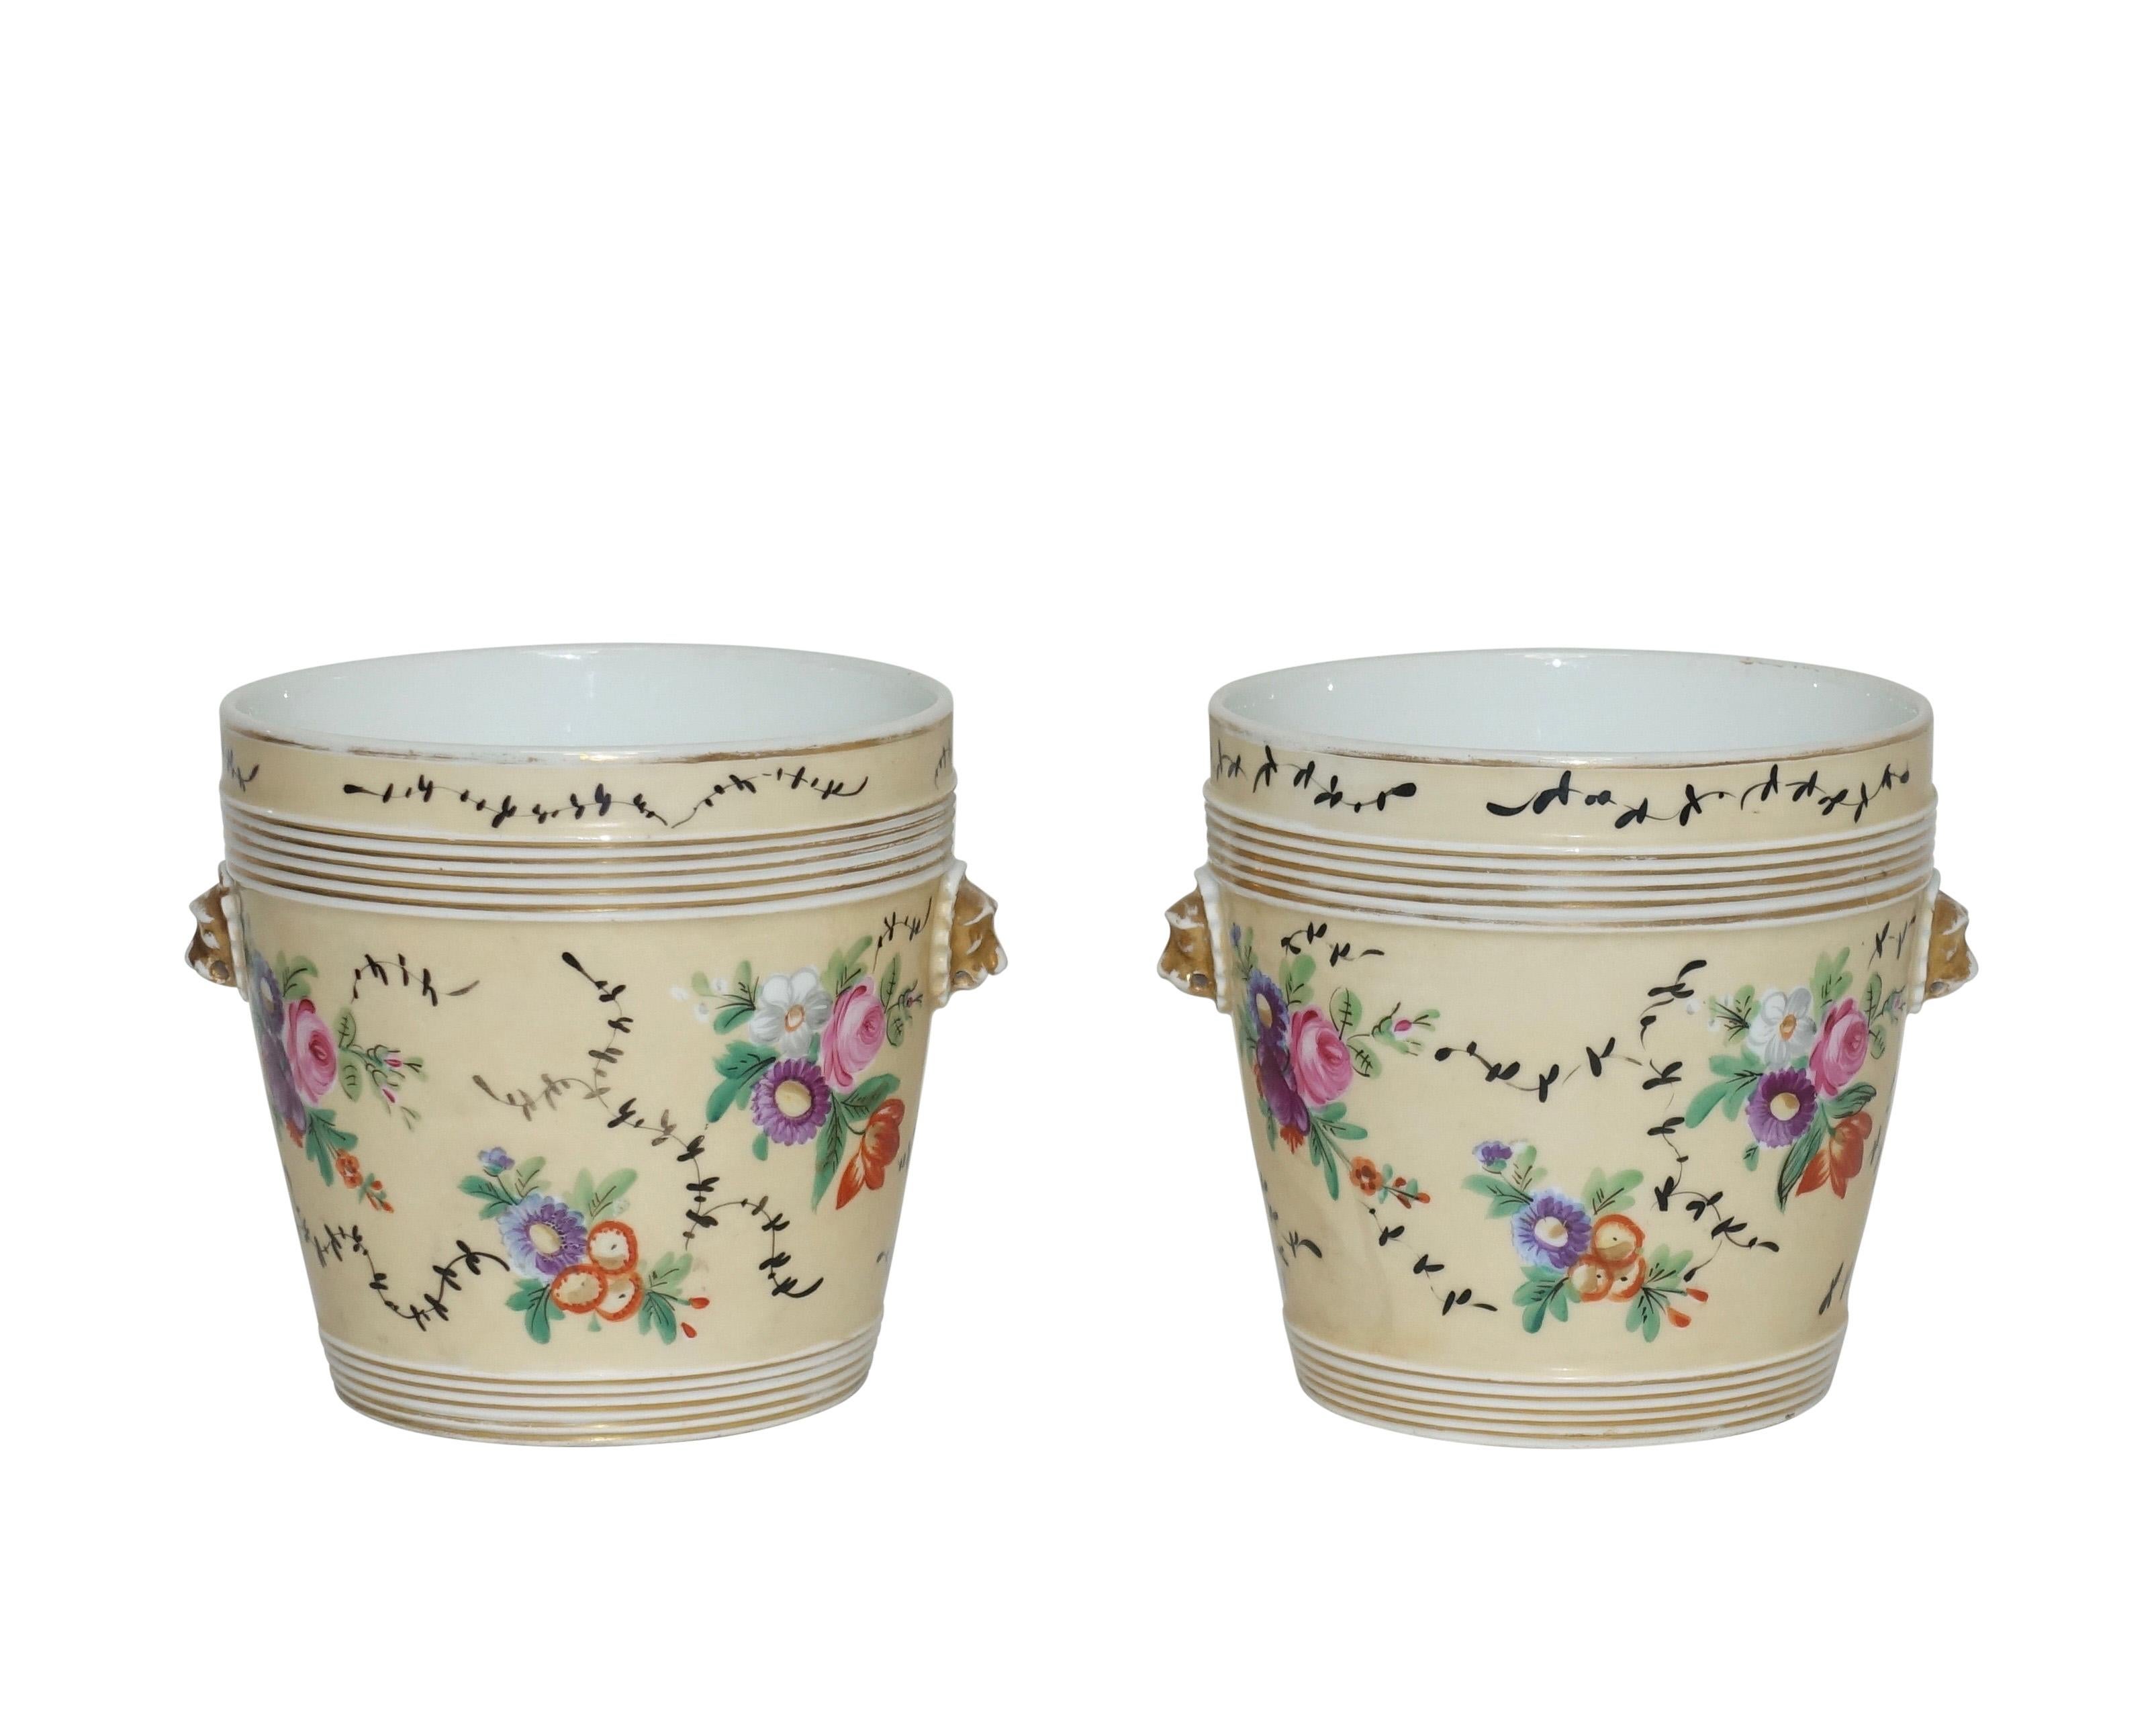 A pair of Paris porcelain cachepots with hand-painted floral decoration, France, mid-19th century.

 